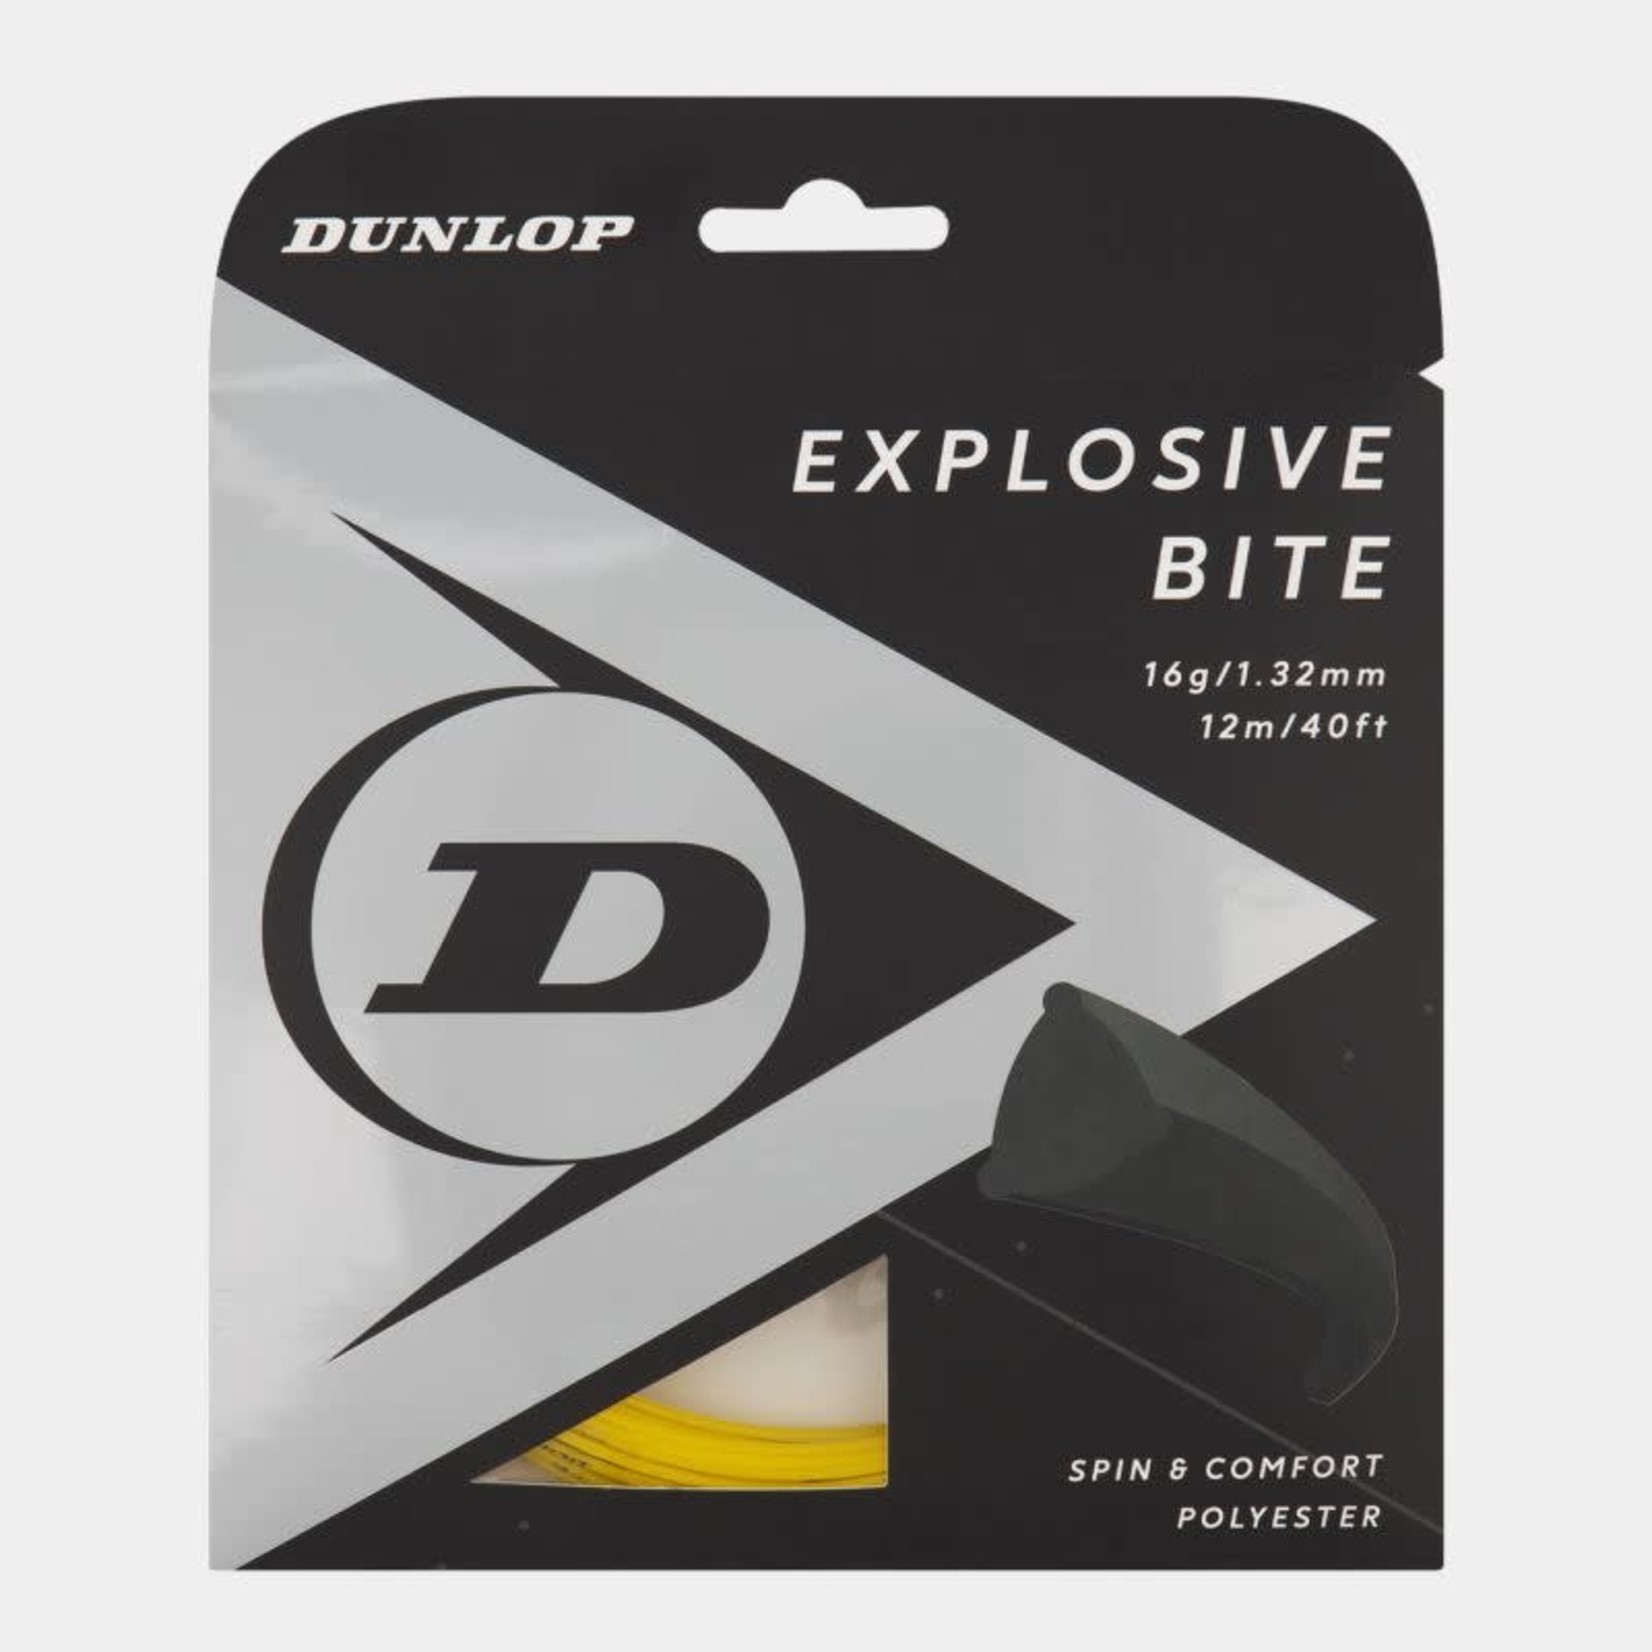 Dunlop Explosive Bite